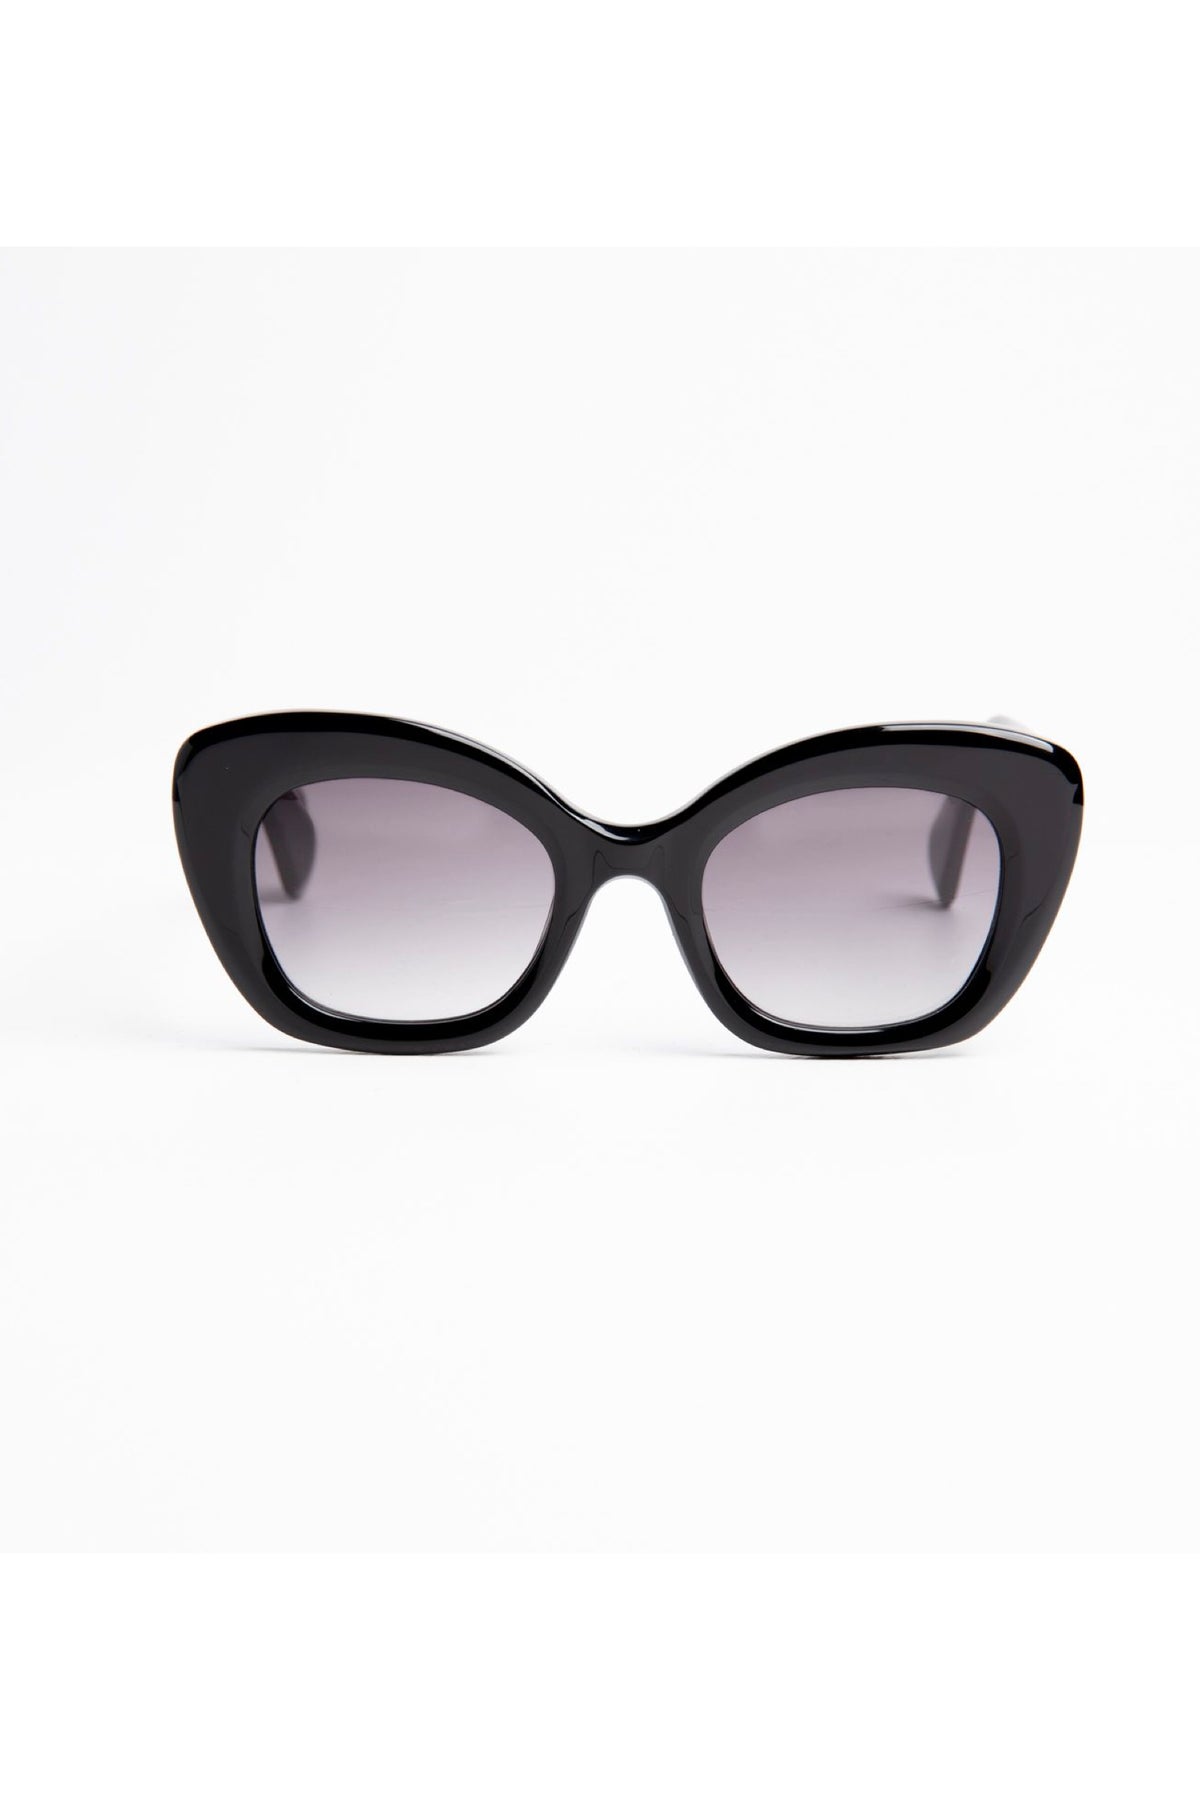 Cat Ballou Black Sunglasses